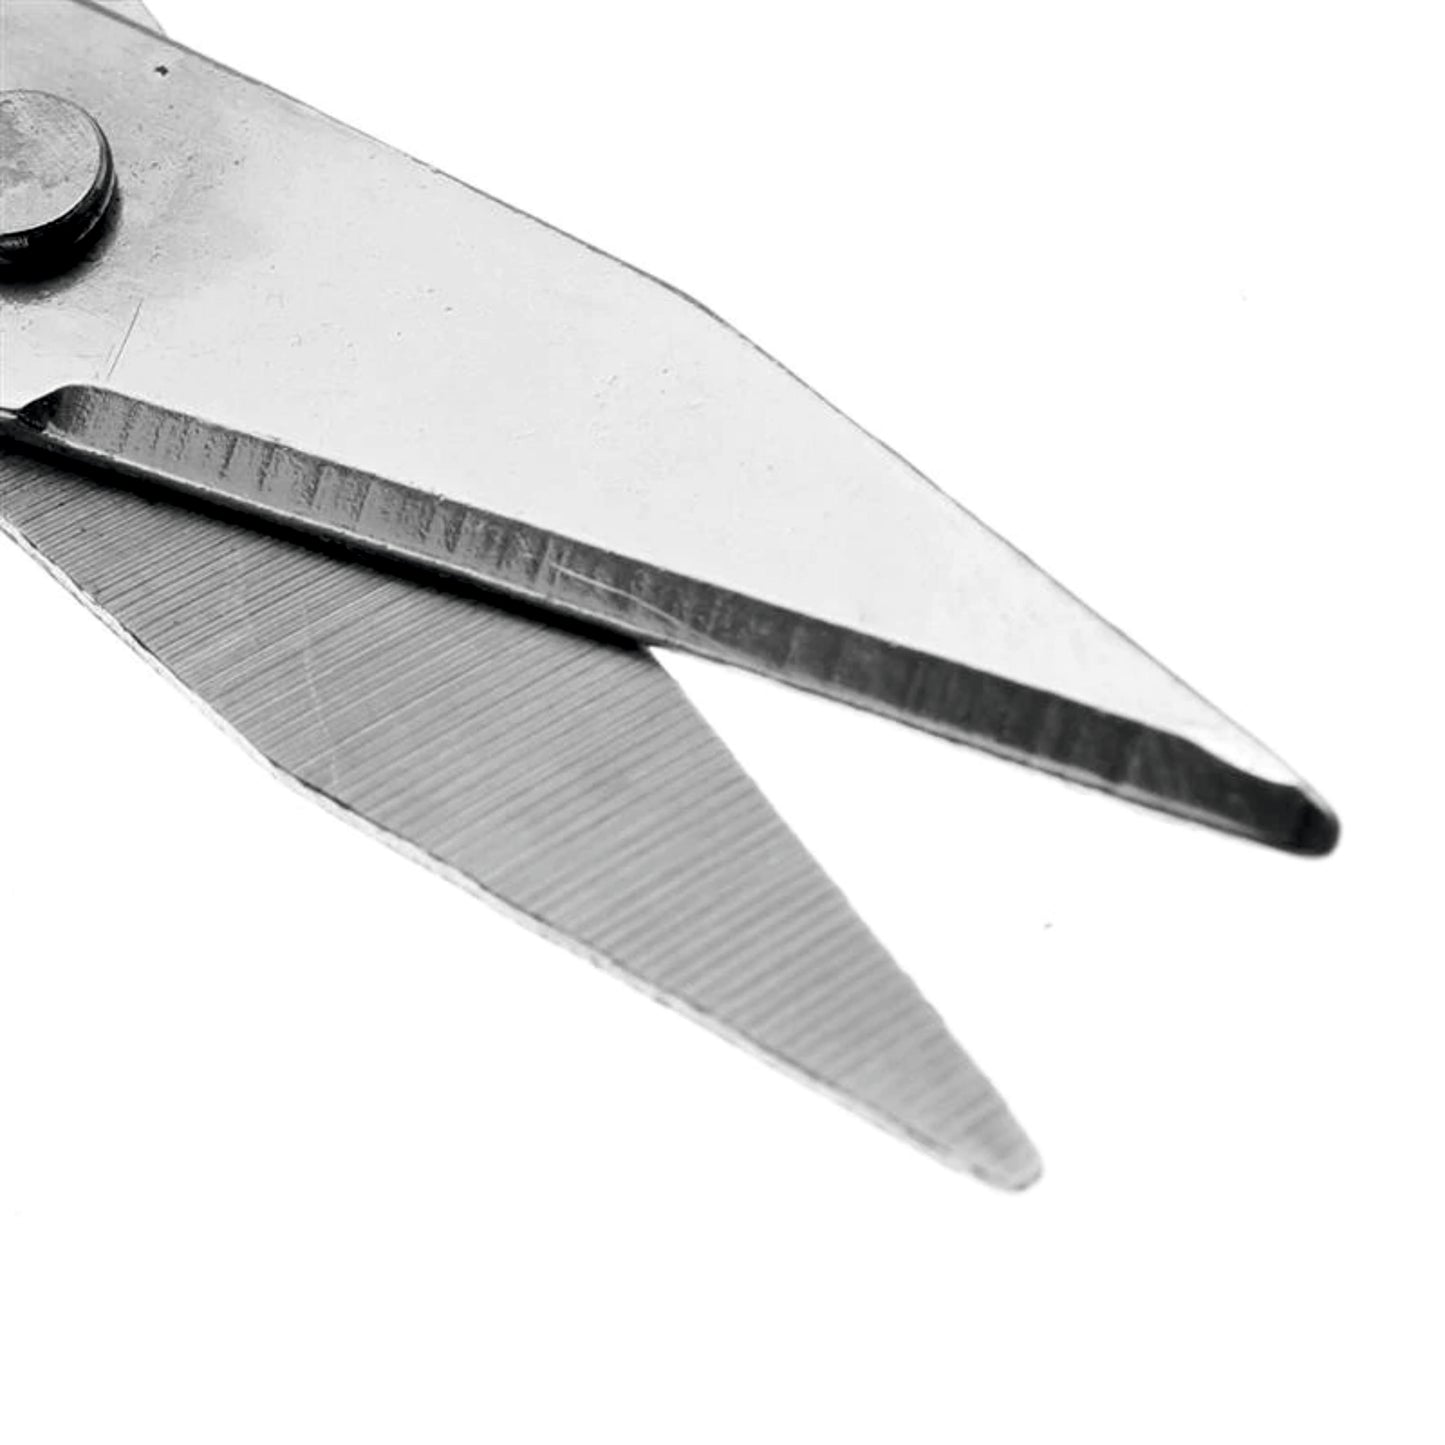 EDC Mini Small Folding Scissors Key Ring Emergency Camping Travel Tools